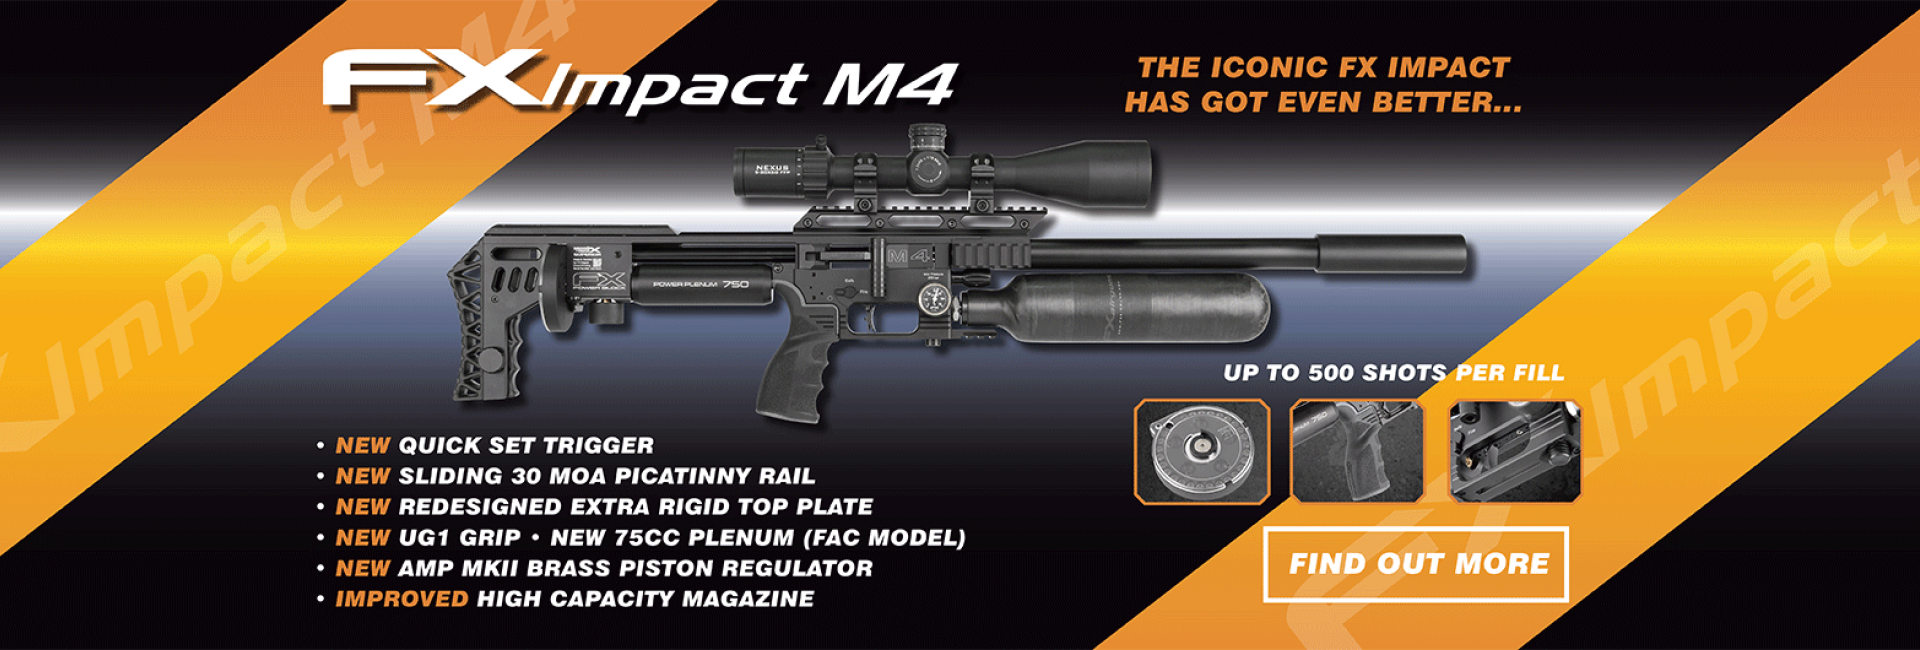 FX Impact M4 - July 24